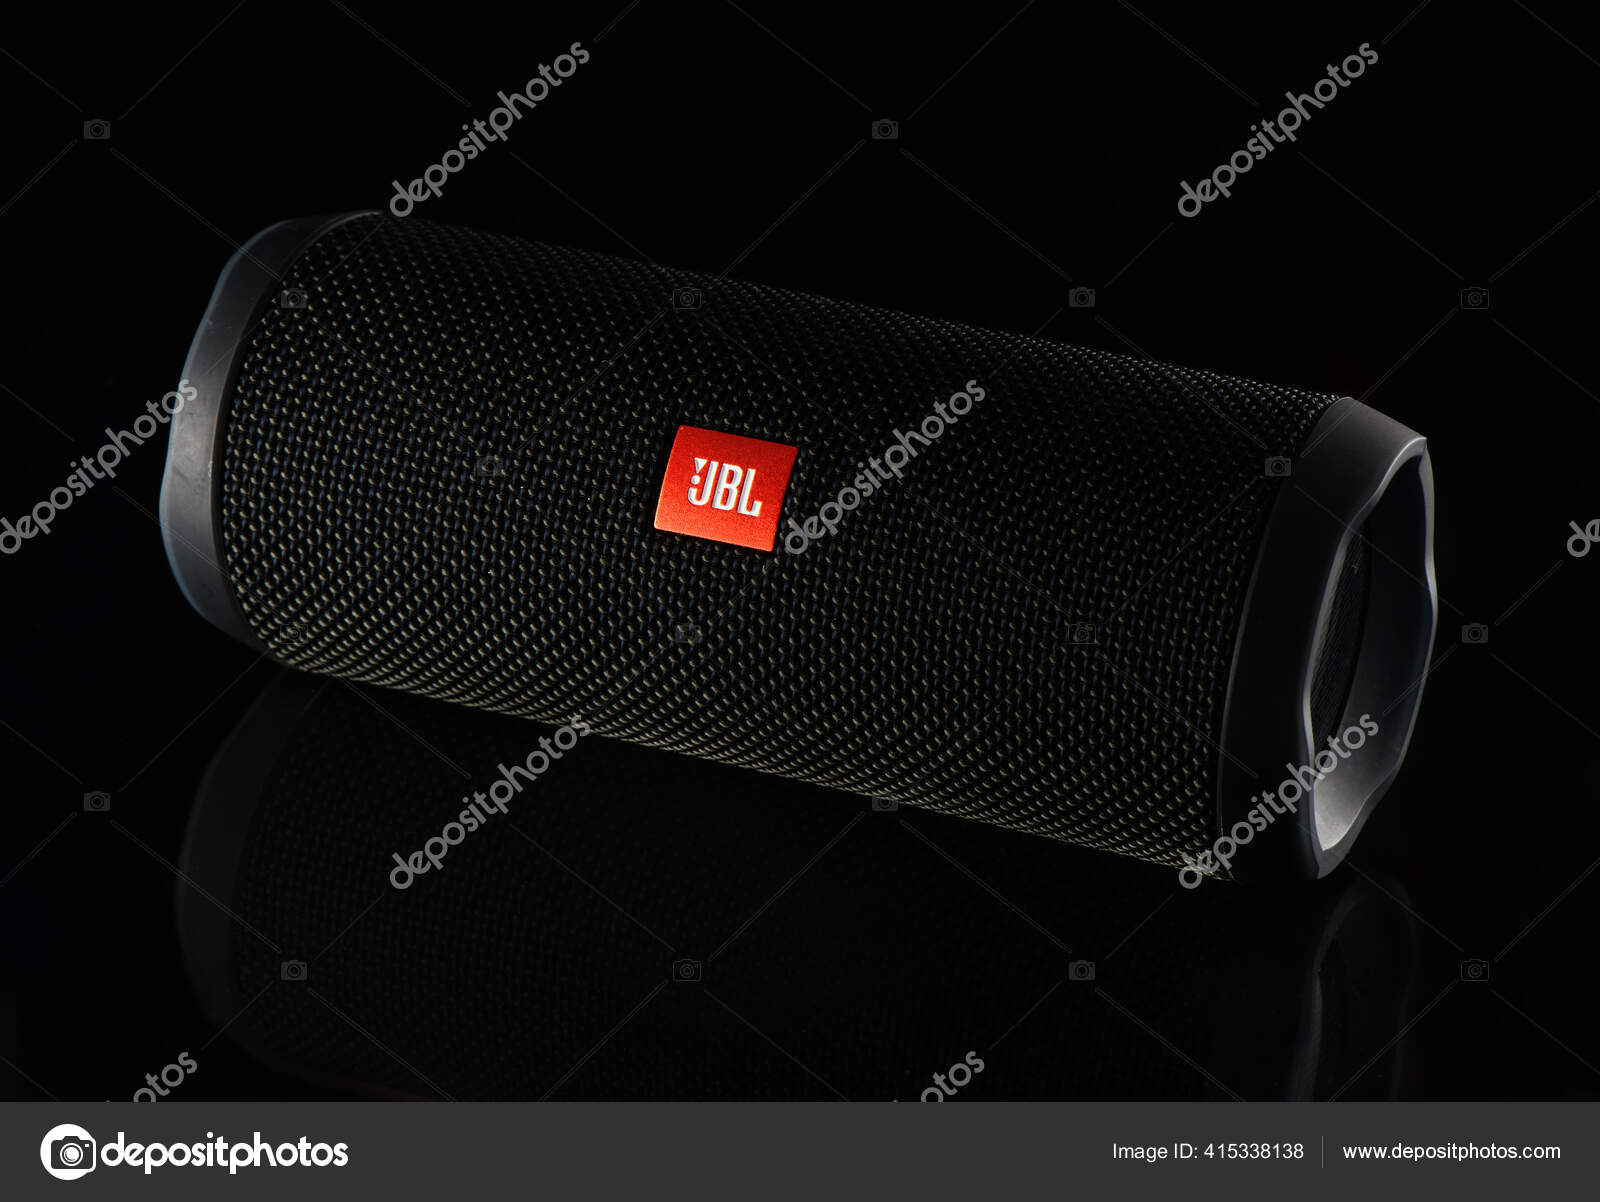 JBL Flip 4 speaker on black background – Stock Editorial Photo